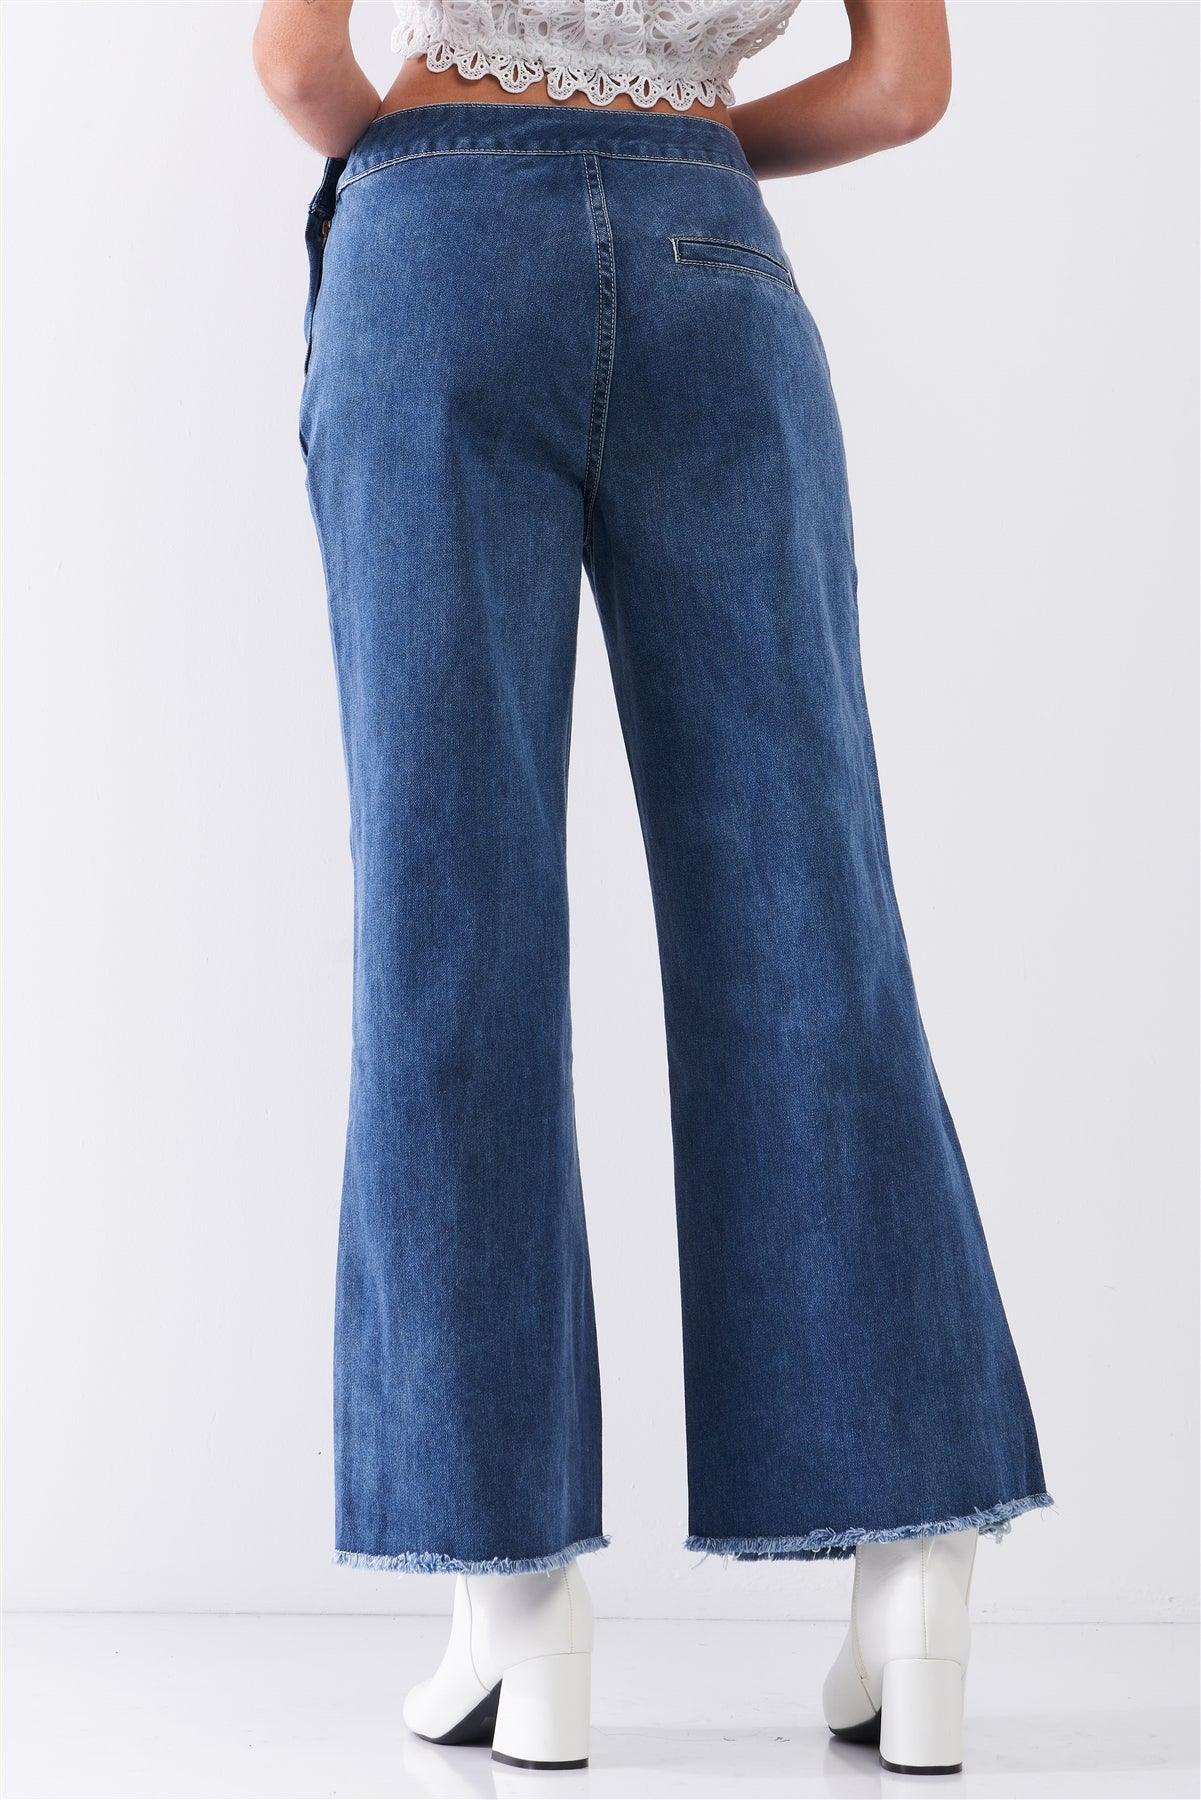 Dark Blue Denim Low-Rise Raw Hem Detail Side Zip-Up Basic Flare Jean Pants /1-1-2-2-1-1